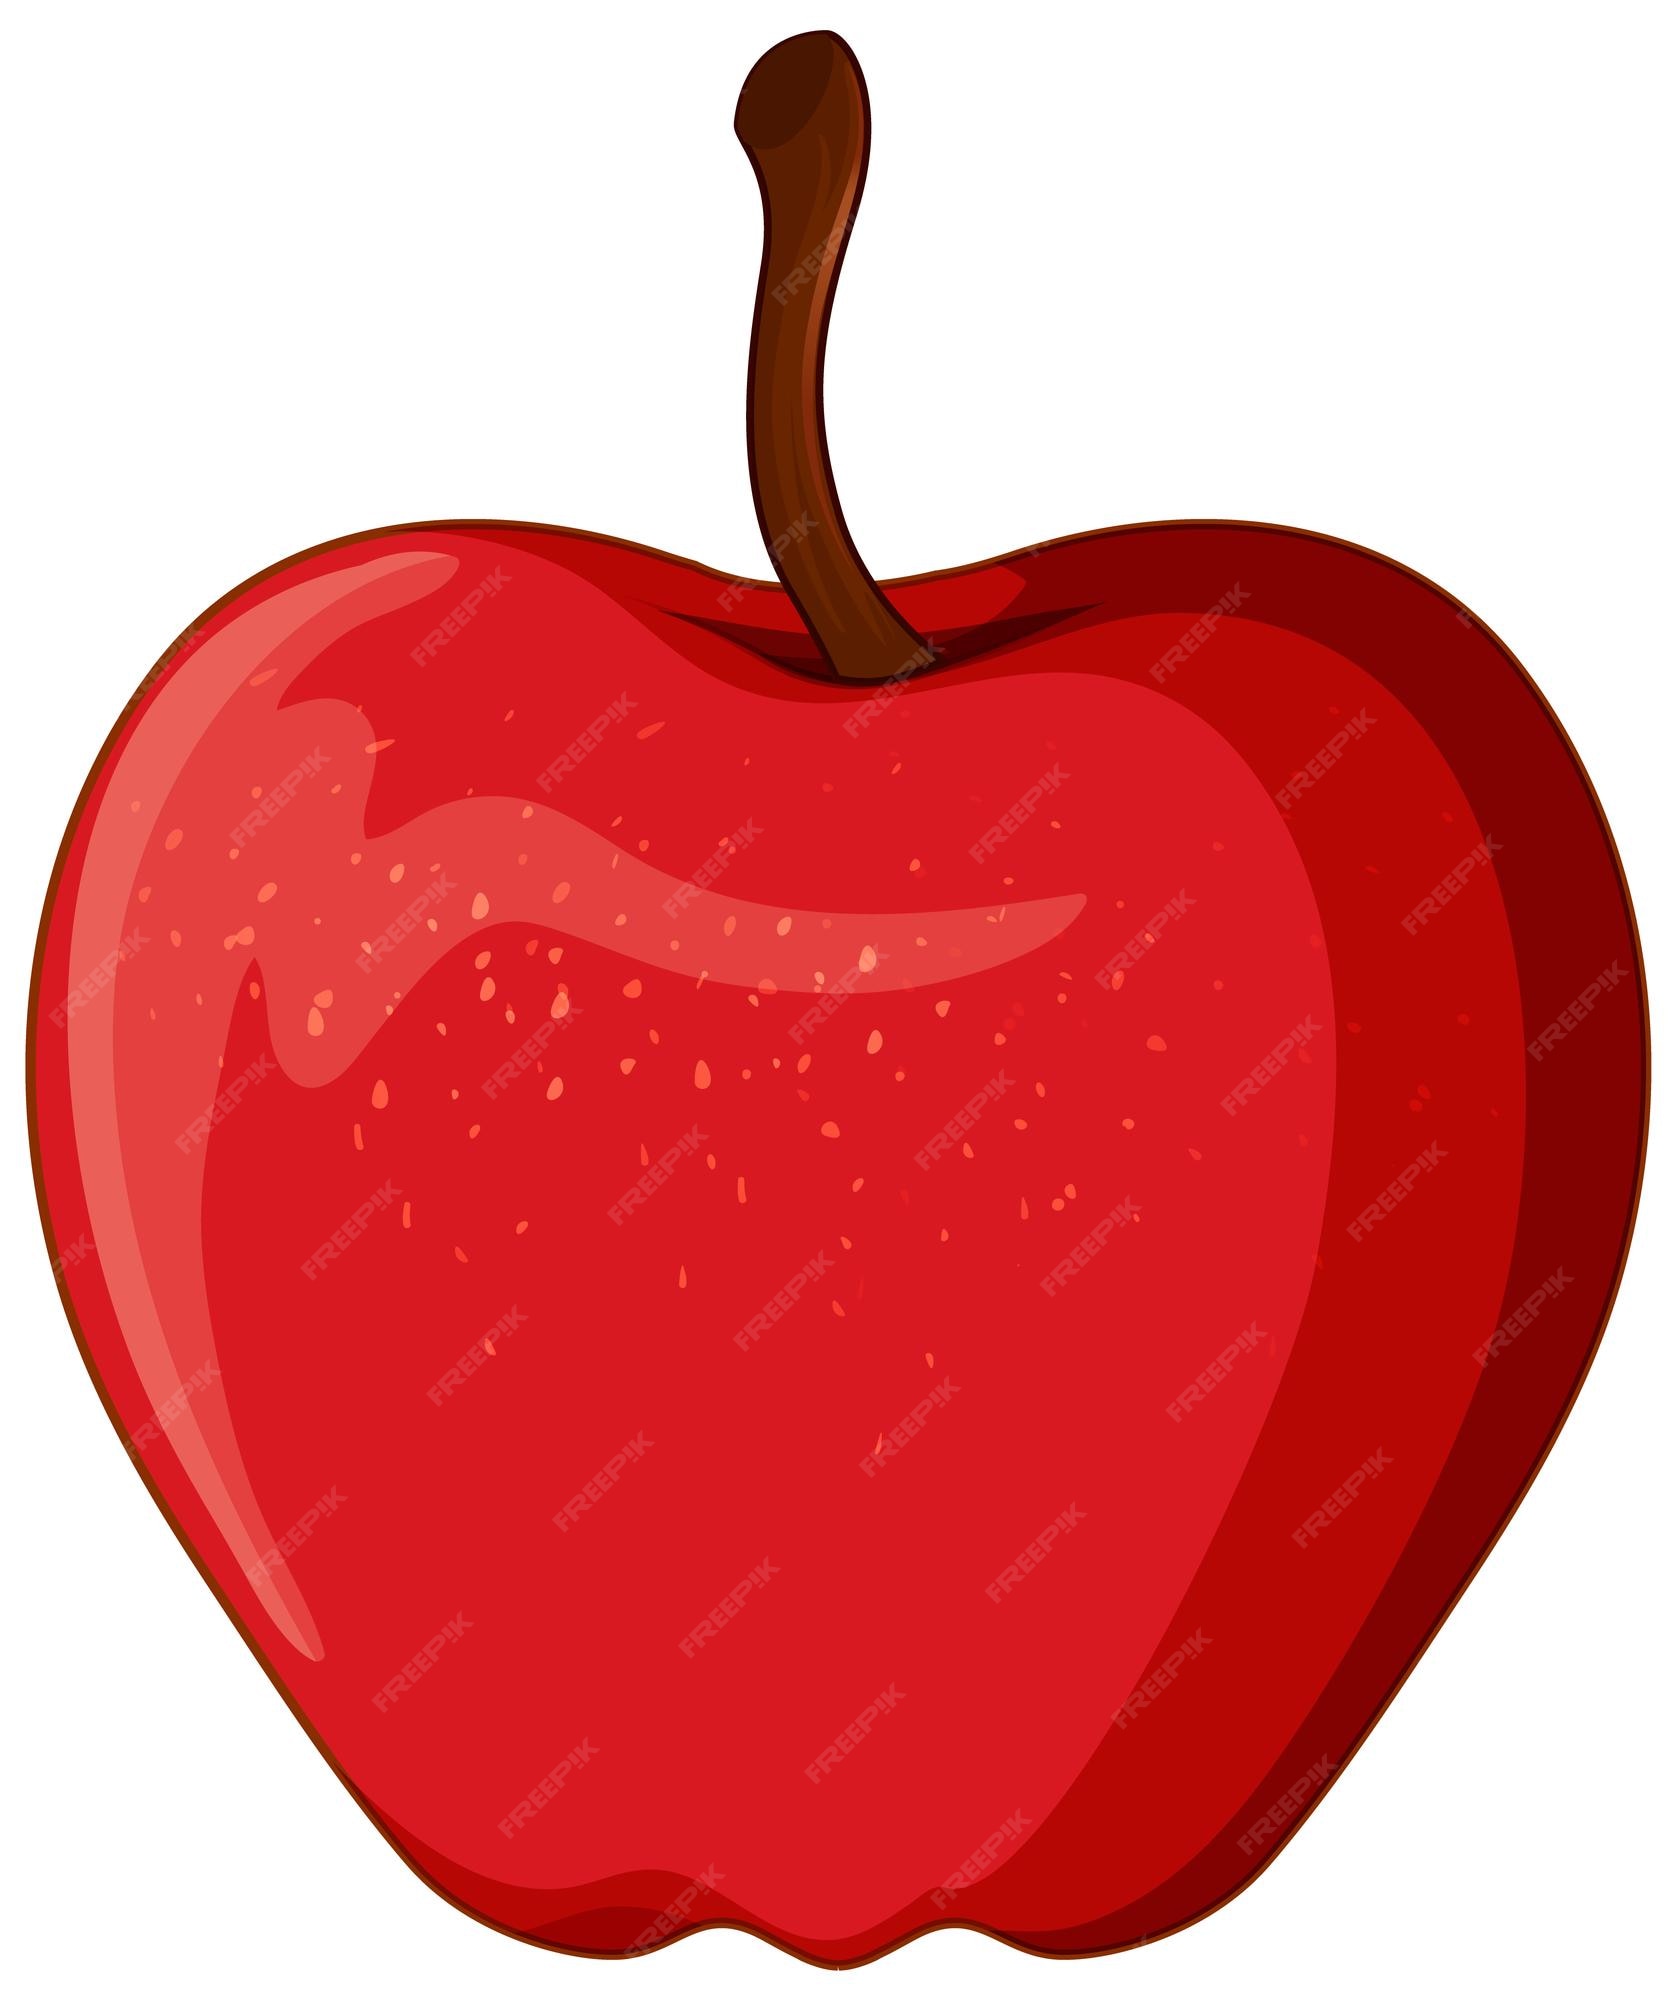 Effektivitet Hvis Susteen Red apple Vectors & Illustrations for Free Download | Freepik